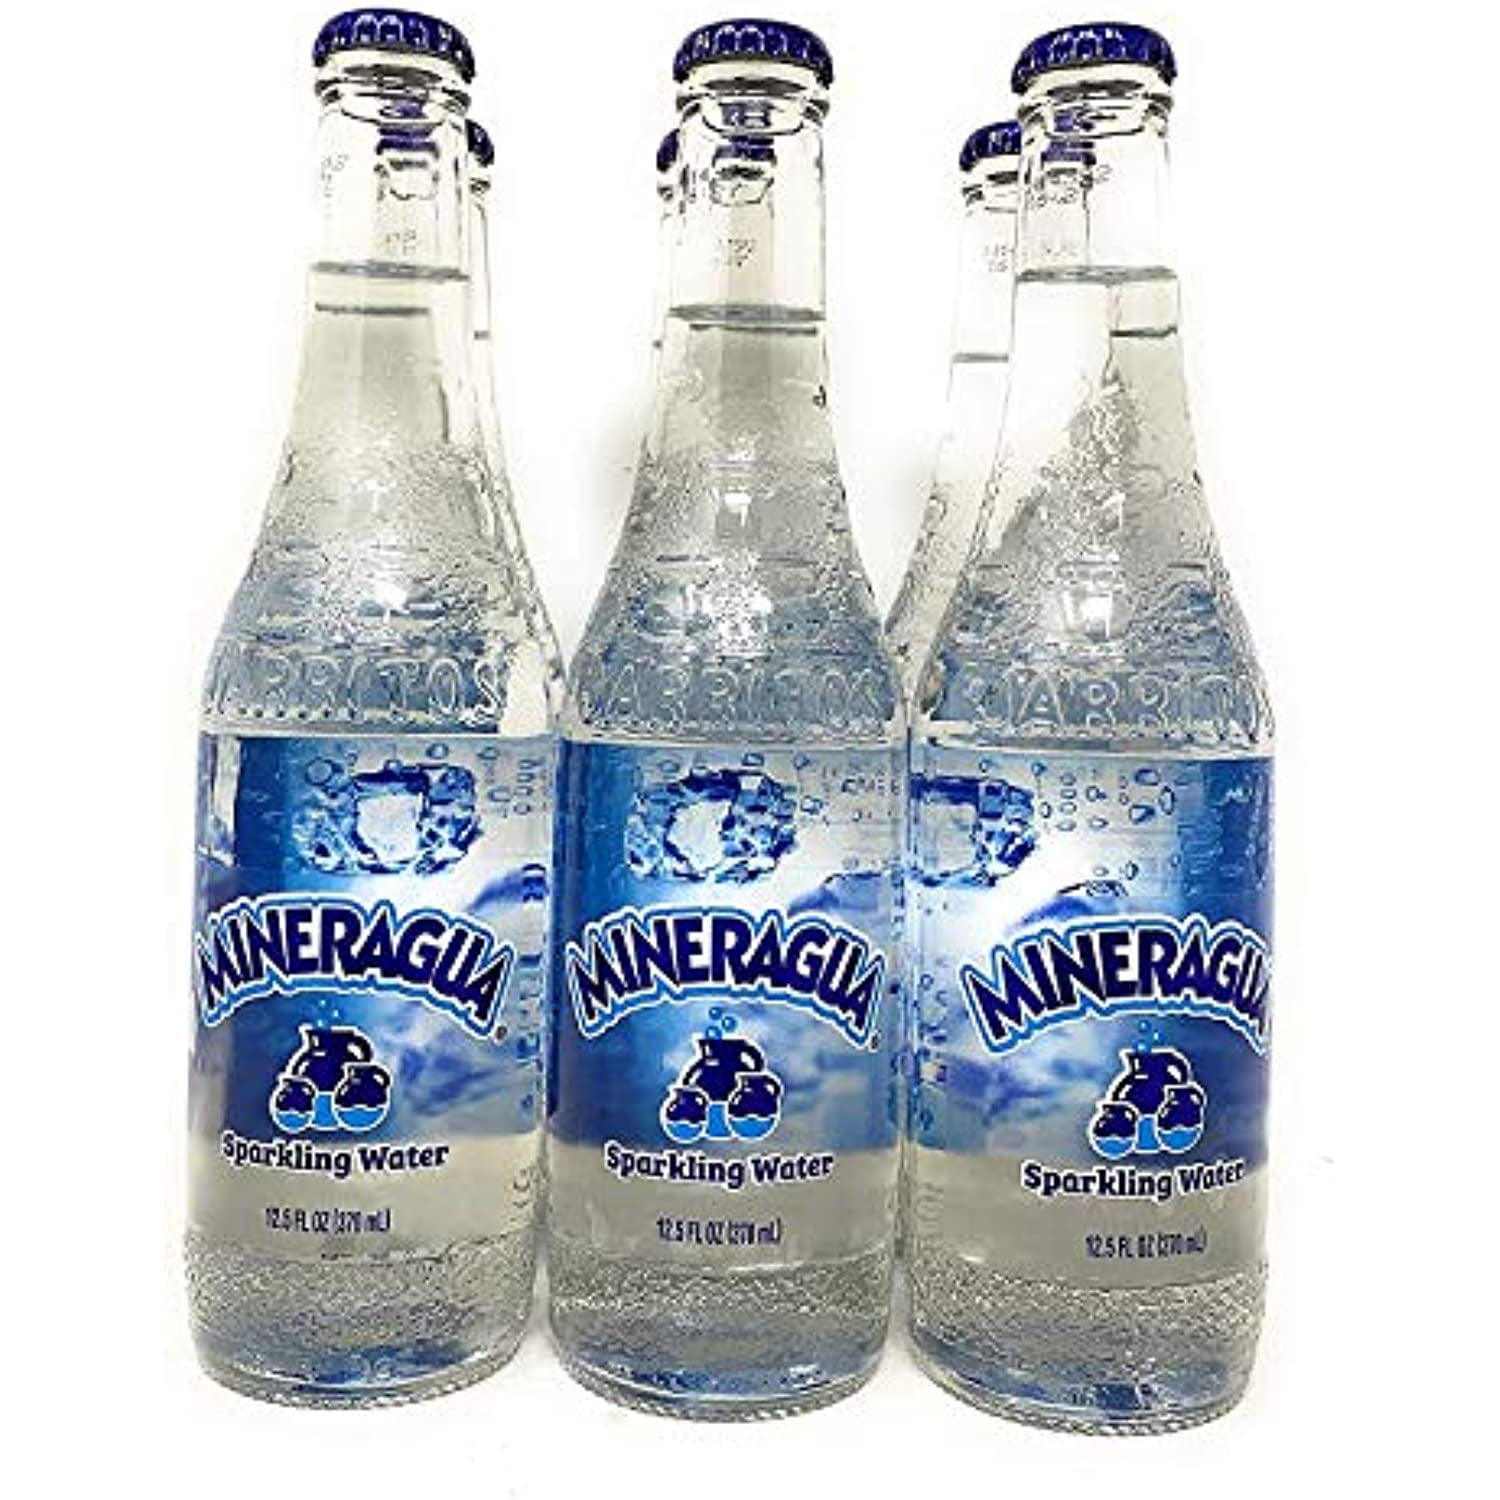 Jarritos Mineragua Sparkling Water 12.5floz (370mL), 6 Pack